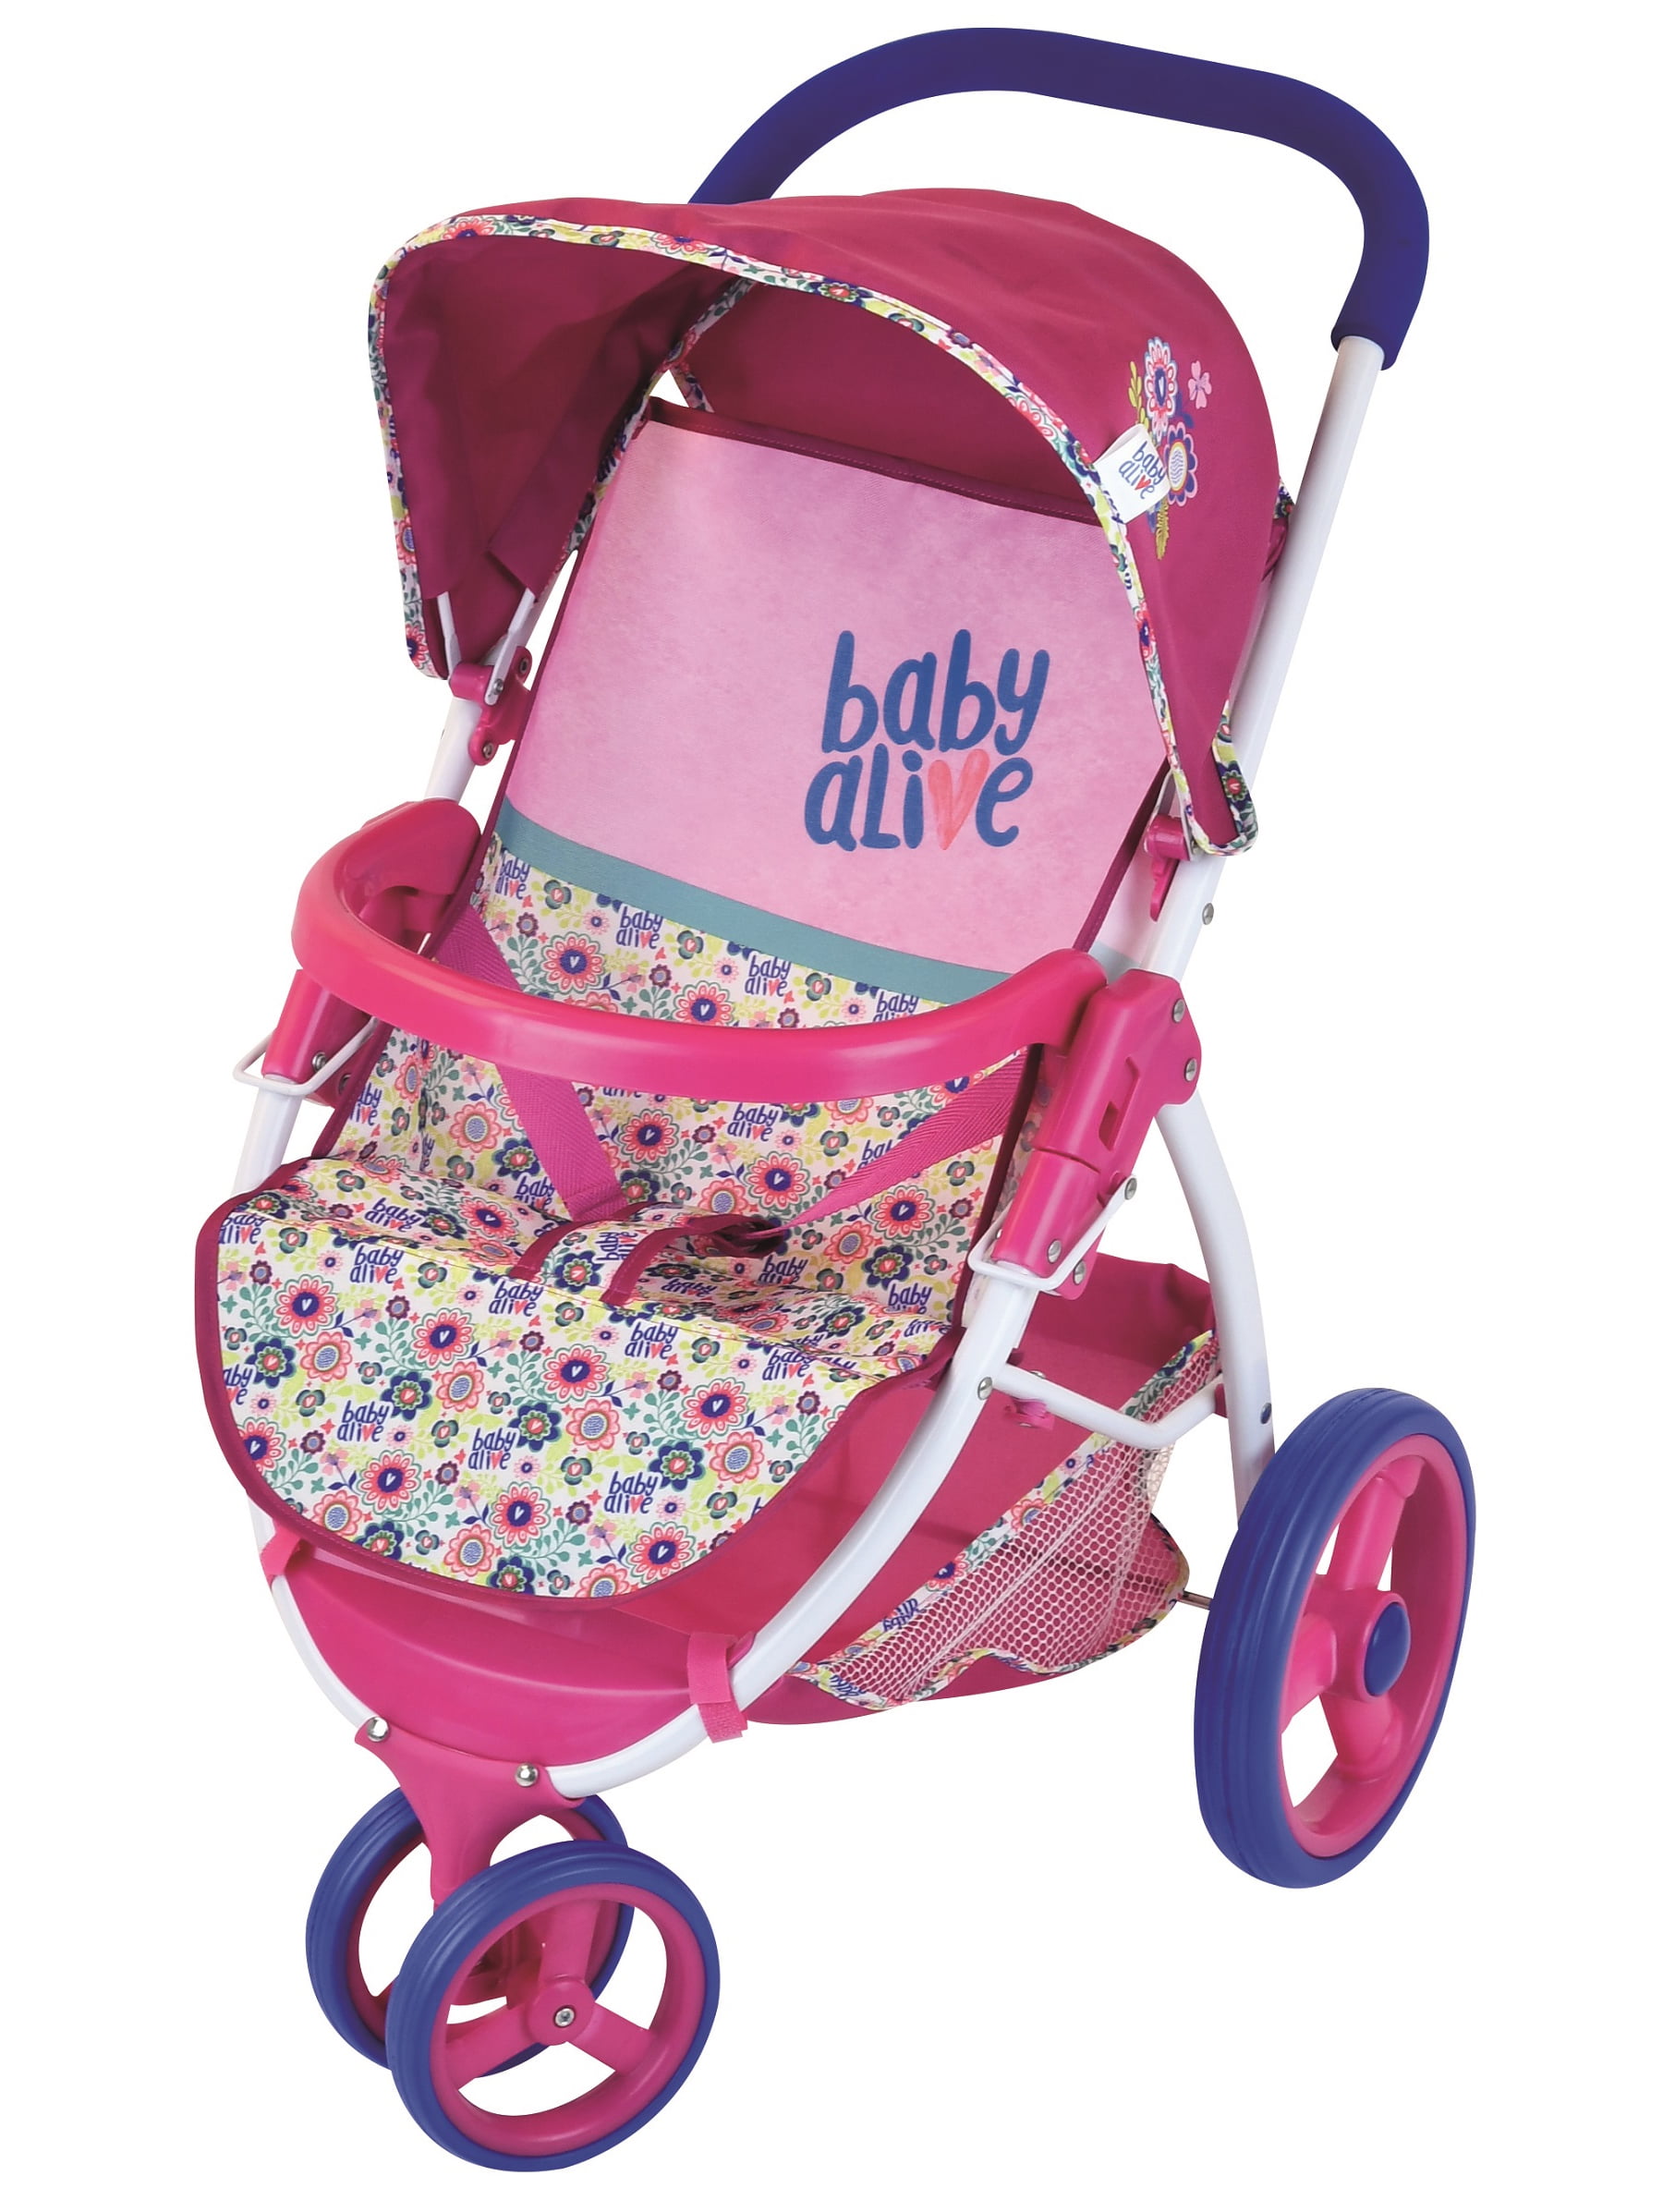 Baby Alive Stroller Bundle Online, 58% OFF | www.propellermadrid.com